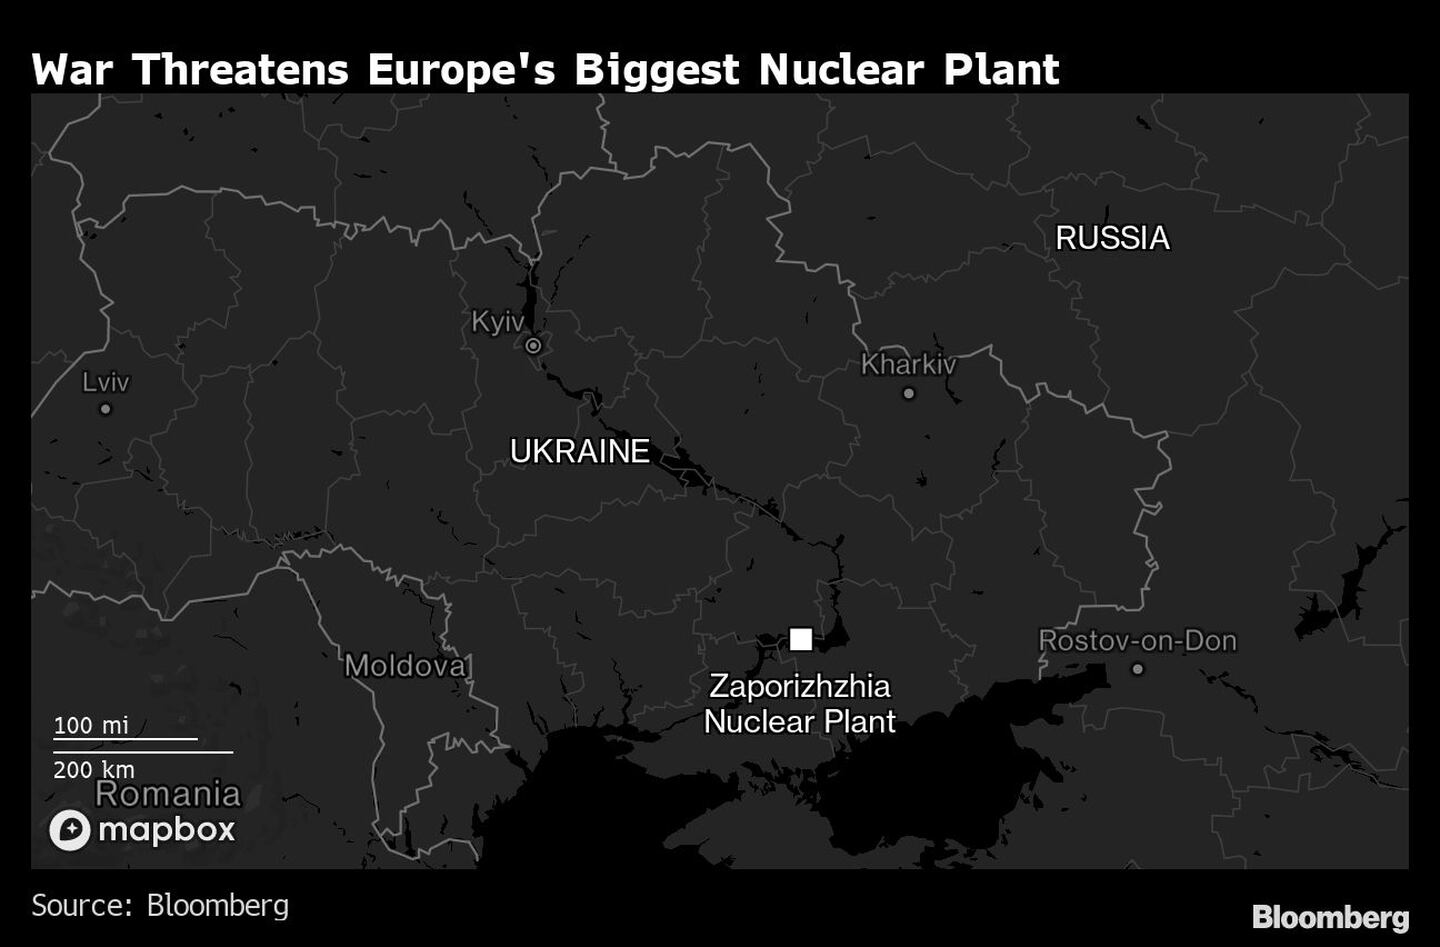 La guerra amenaza la mayor planta nuclear de Europadfd